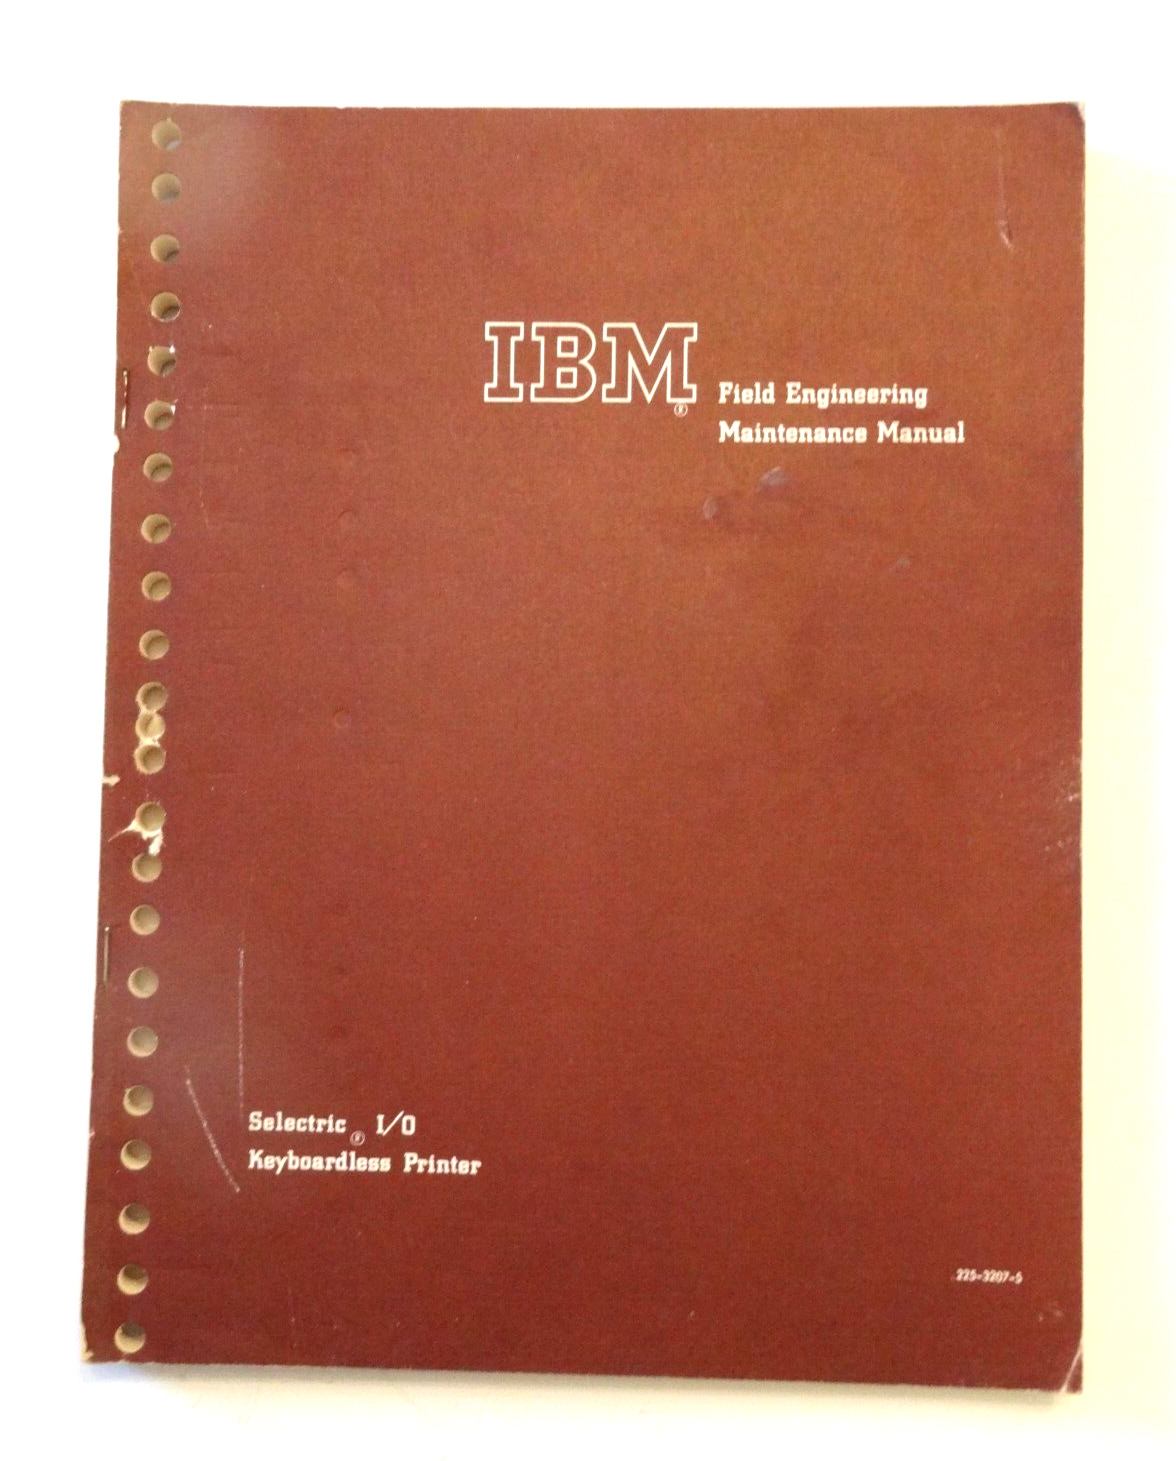 1967 IBM Selectric I/O Keyboardless Printer Field Engineering Maintenance Manual